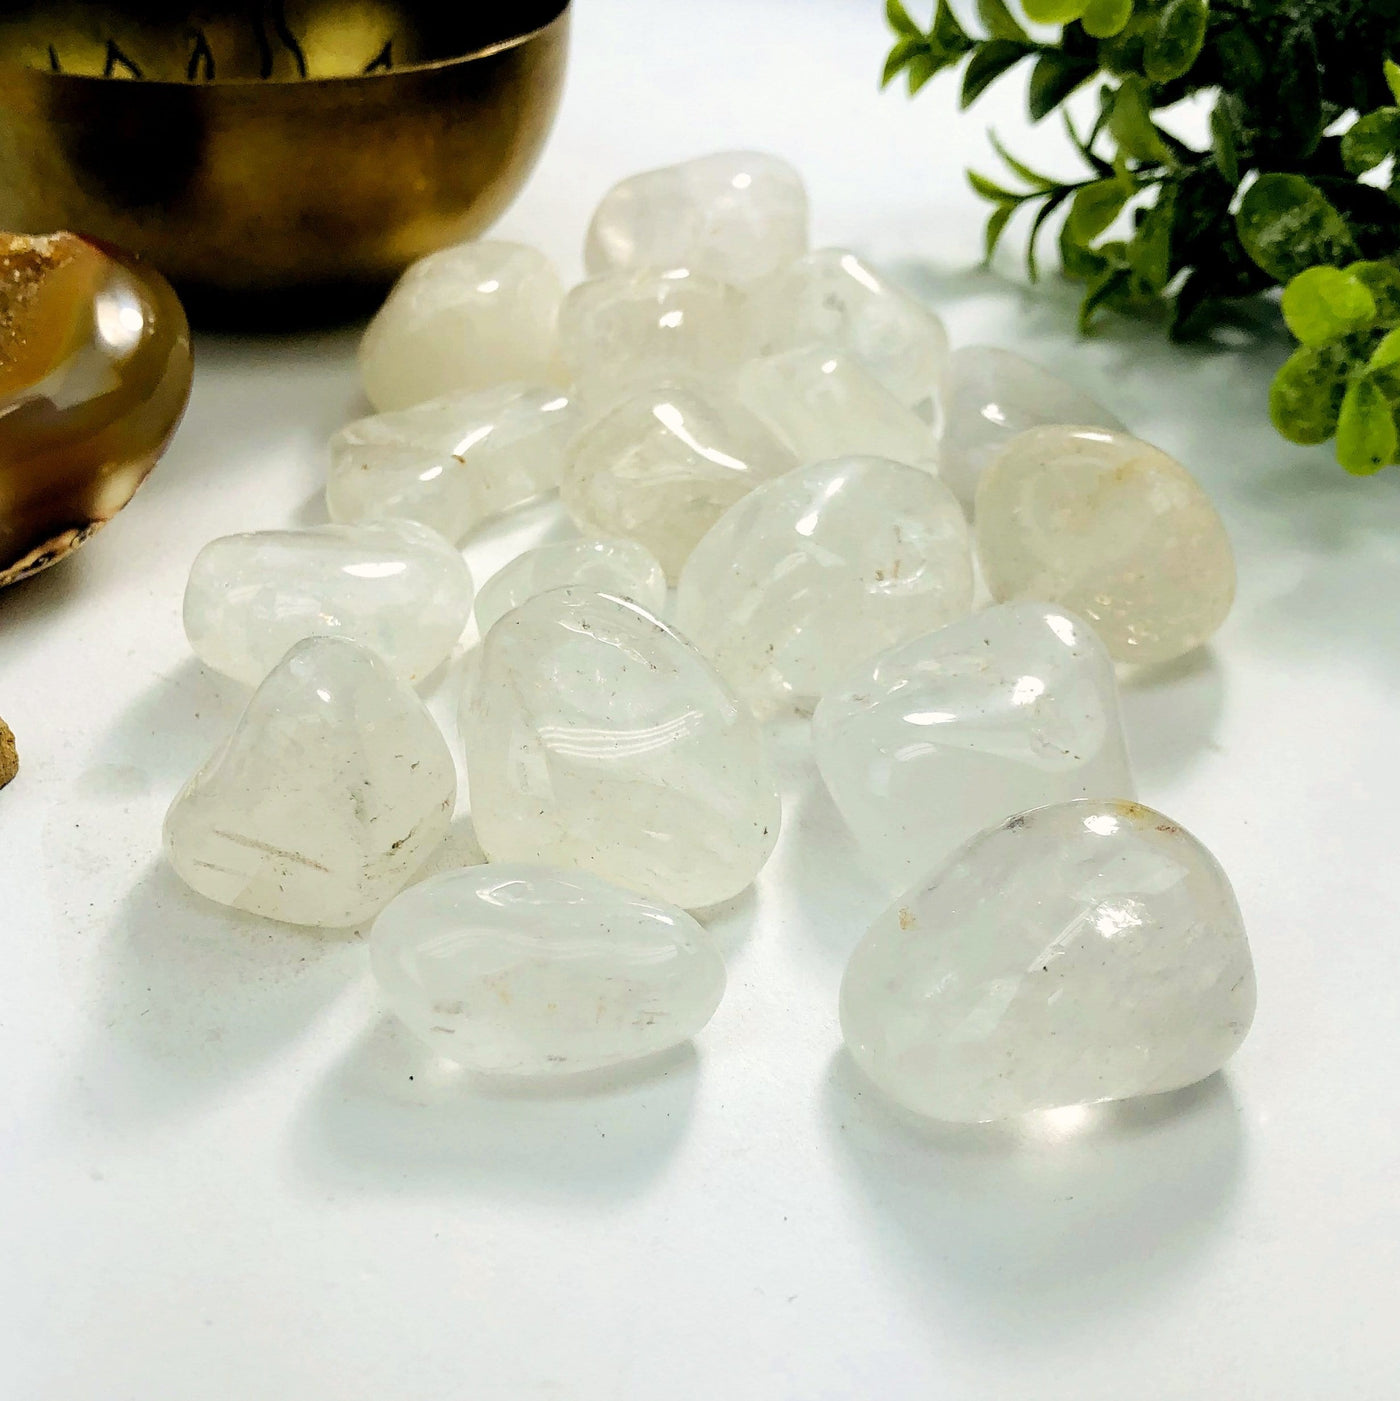 Crystal Quartz tumbled stones on a white background.